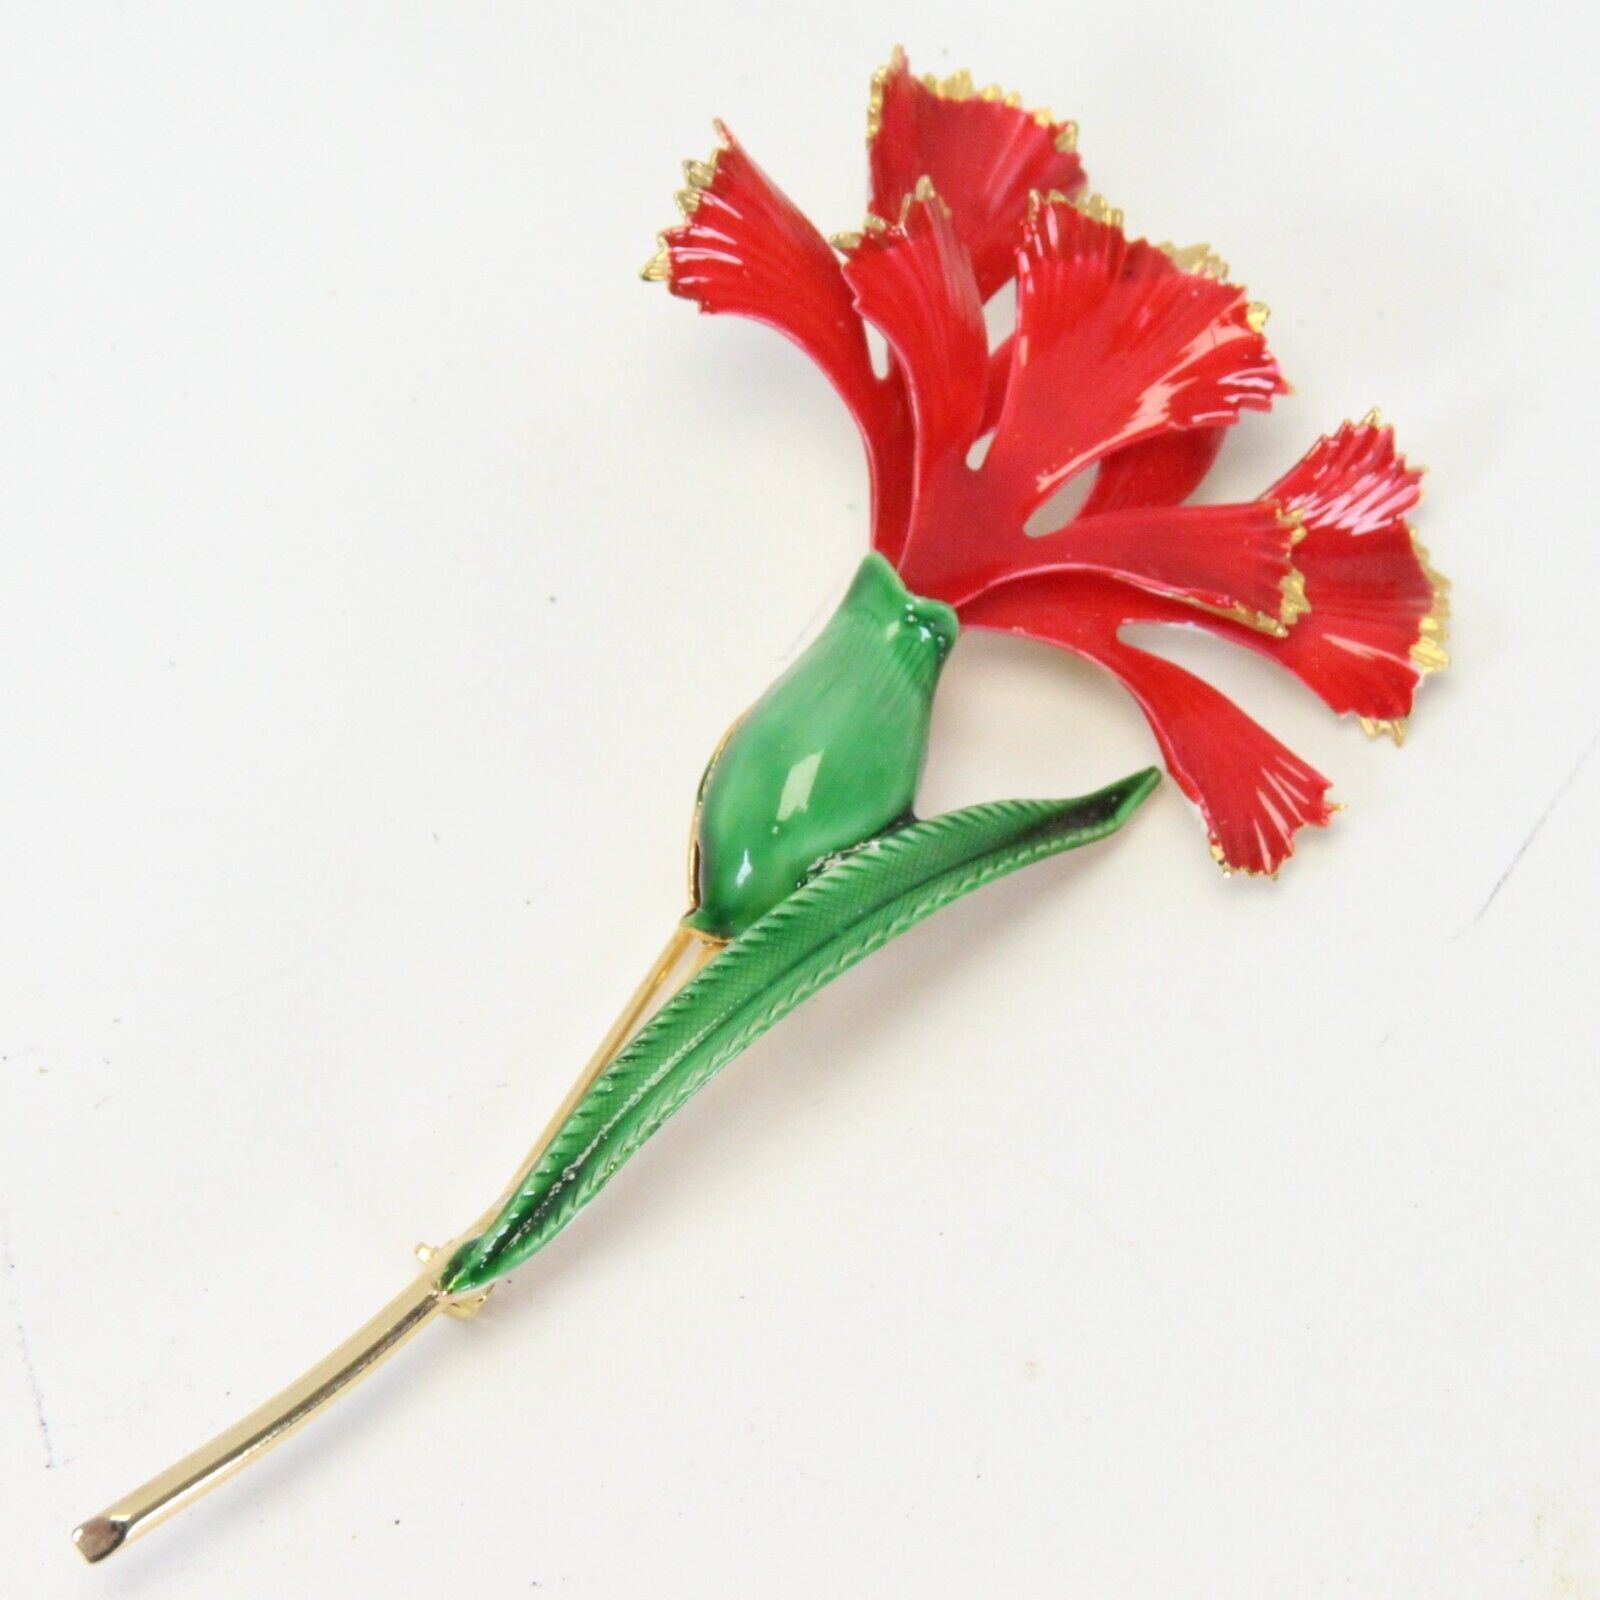 Red Enamel Flower Pin Brooch Fashion Jewelry Gold Tone Edge Green Steam - $19.59